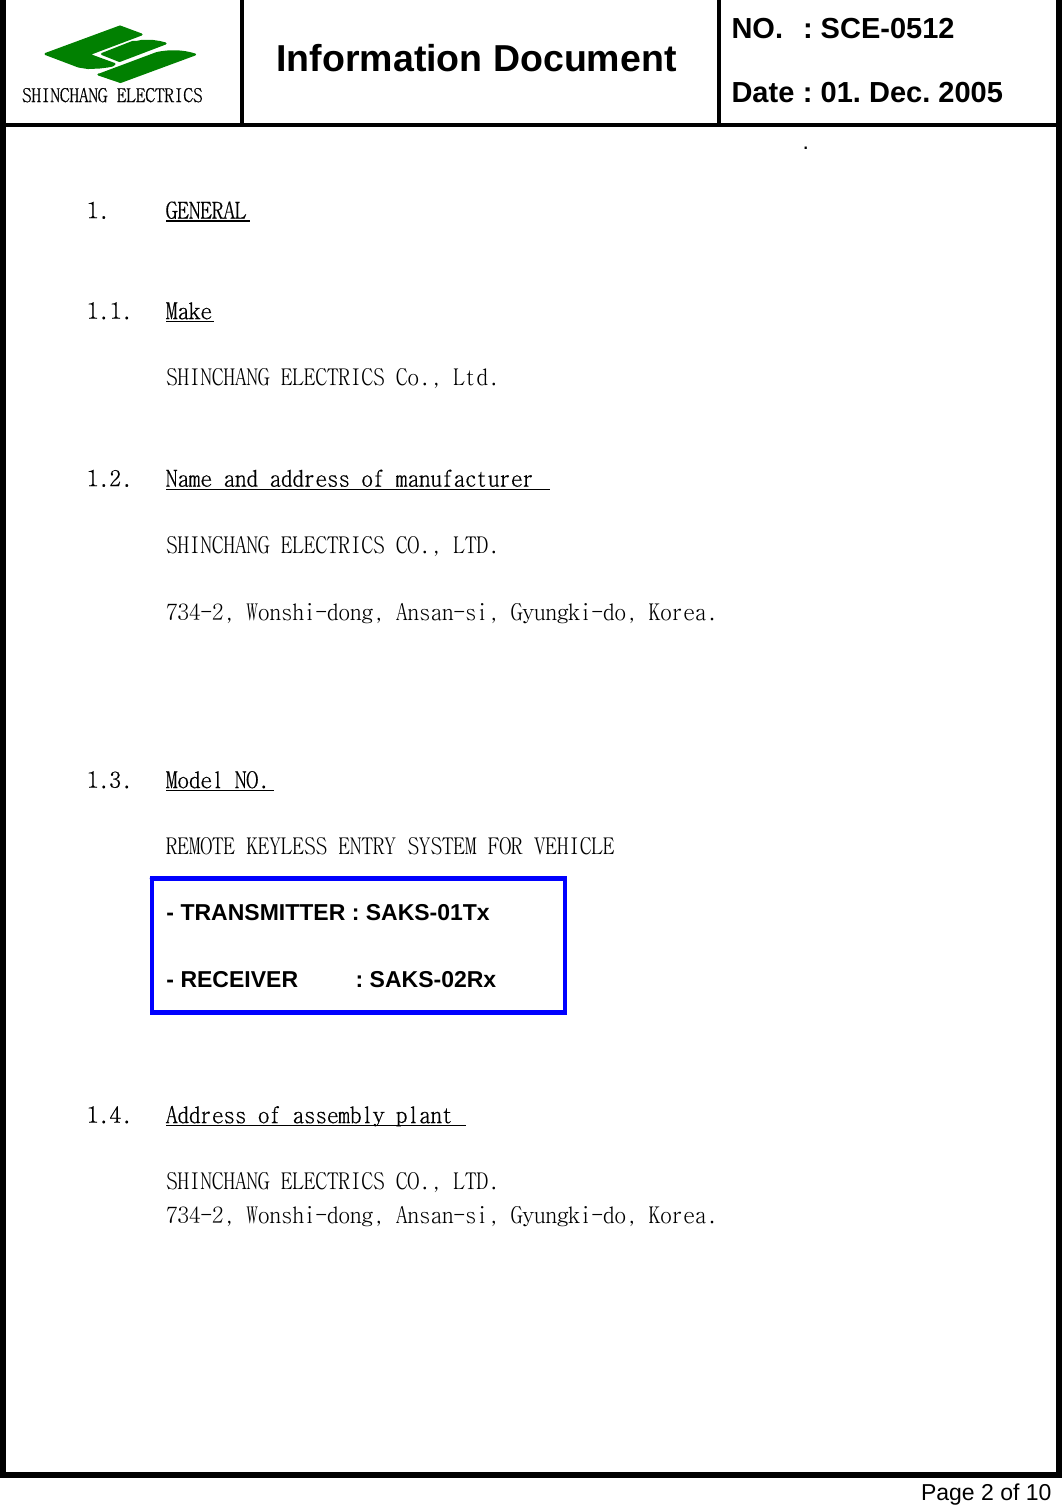  NO. : SCE-0512 Date : 01. Dec. 2005.1. GENERAL1.1. MakeSHINCHANG ELECTRICS Co., Ltd.1.2. Name and address of manufacturerSHINCHANG ELECTRICS CO., LTD.734-2, Wonshi-dong, Ansan-si, Gyungki-do, Korea.1.3. Model NO.REMOTE KEYLESS ENTRY SYSTEM FOR VEHICLE- TRANSMITTER : SAKS-01Tx- RECEIVER         : SAKS-02Rx1.4. Address of assembly plantSHINCHANG ELECTRICS CO., LTD.734-2, Wonshi-dong, Ansan-si, Gyungki-do, Korea.Page 2 of 10Information DocumentSHINCHANG ELECTRICS